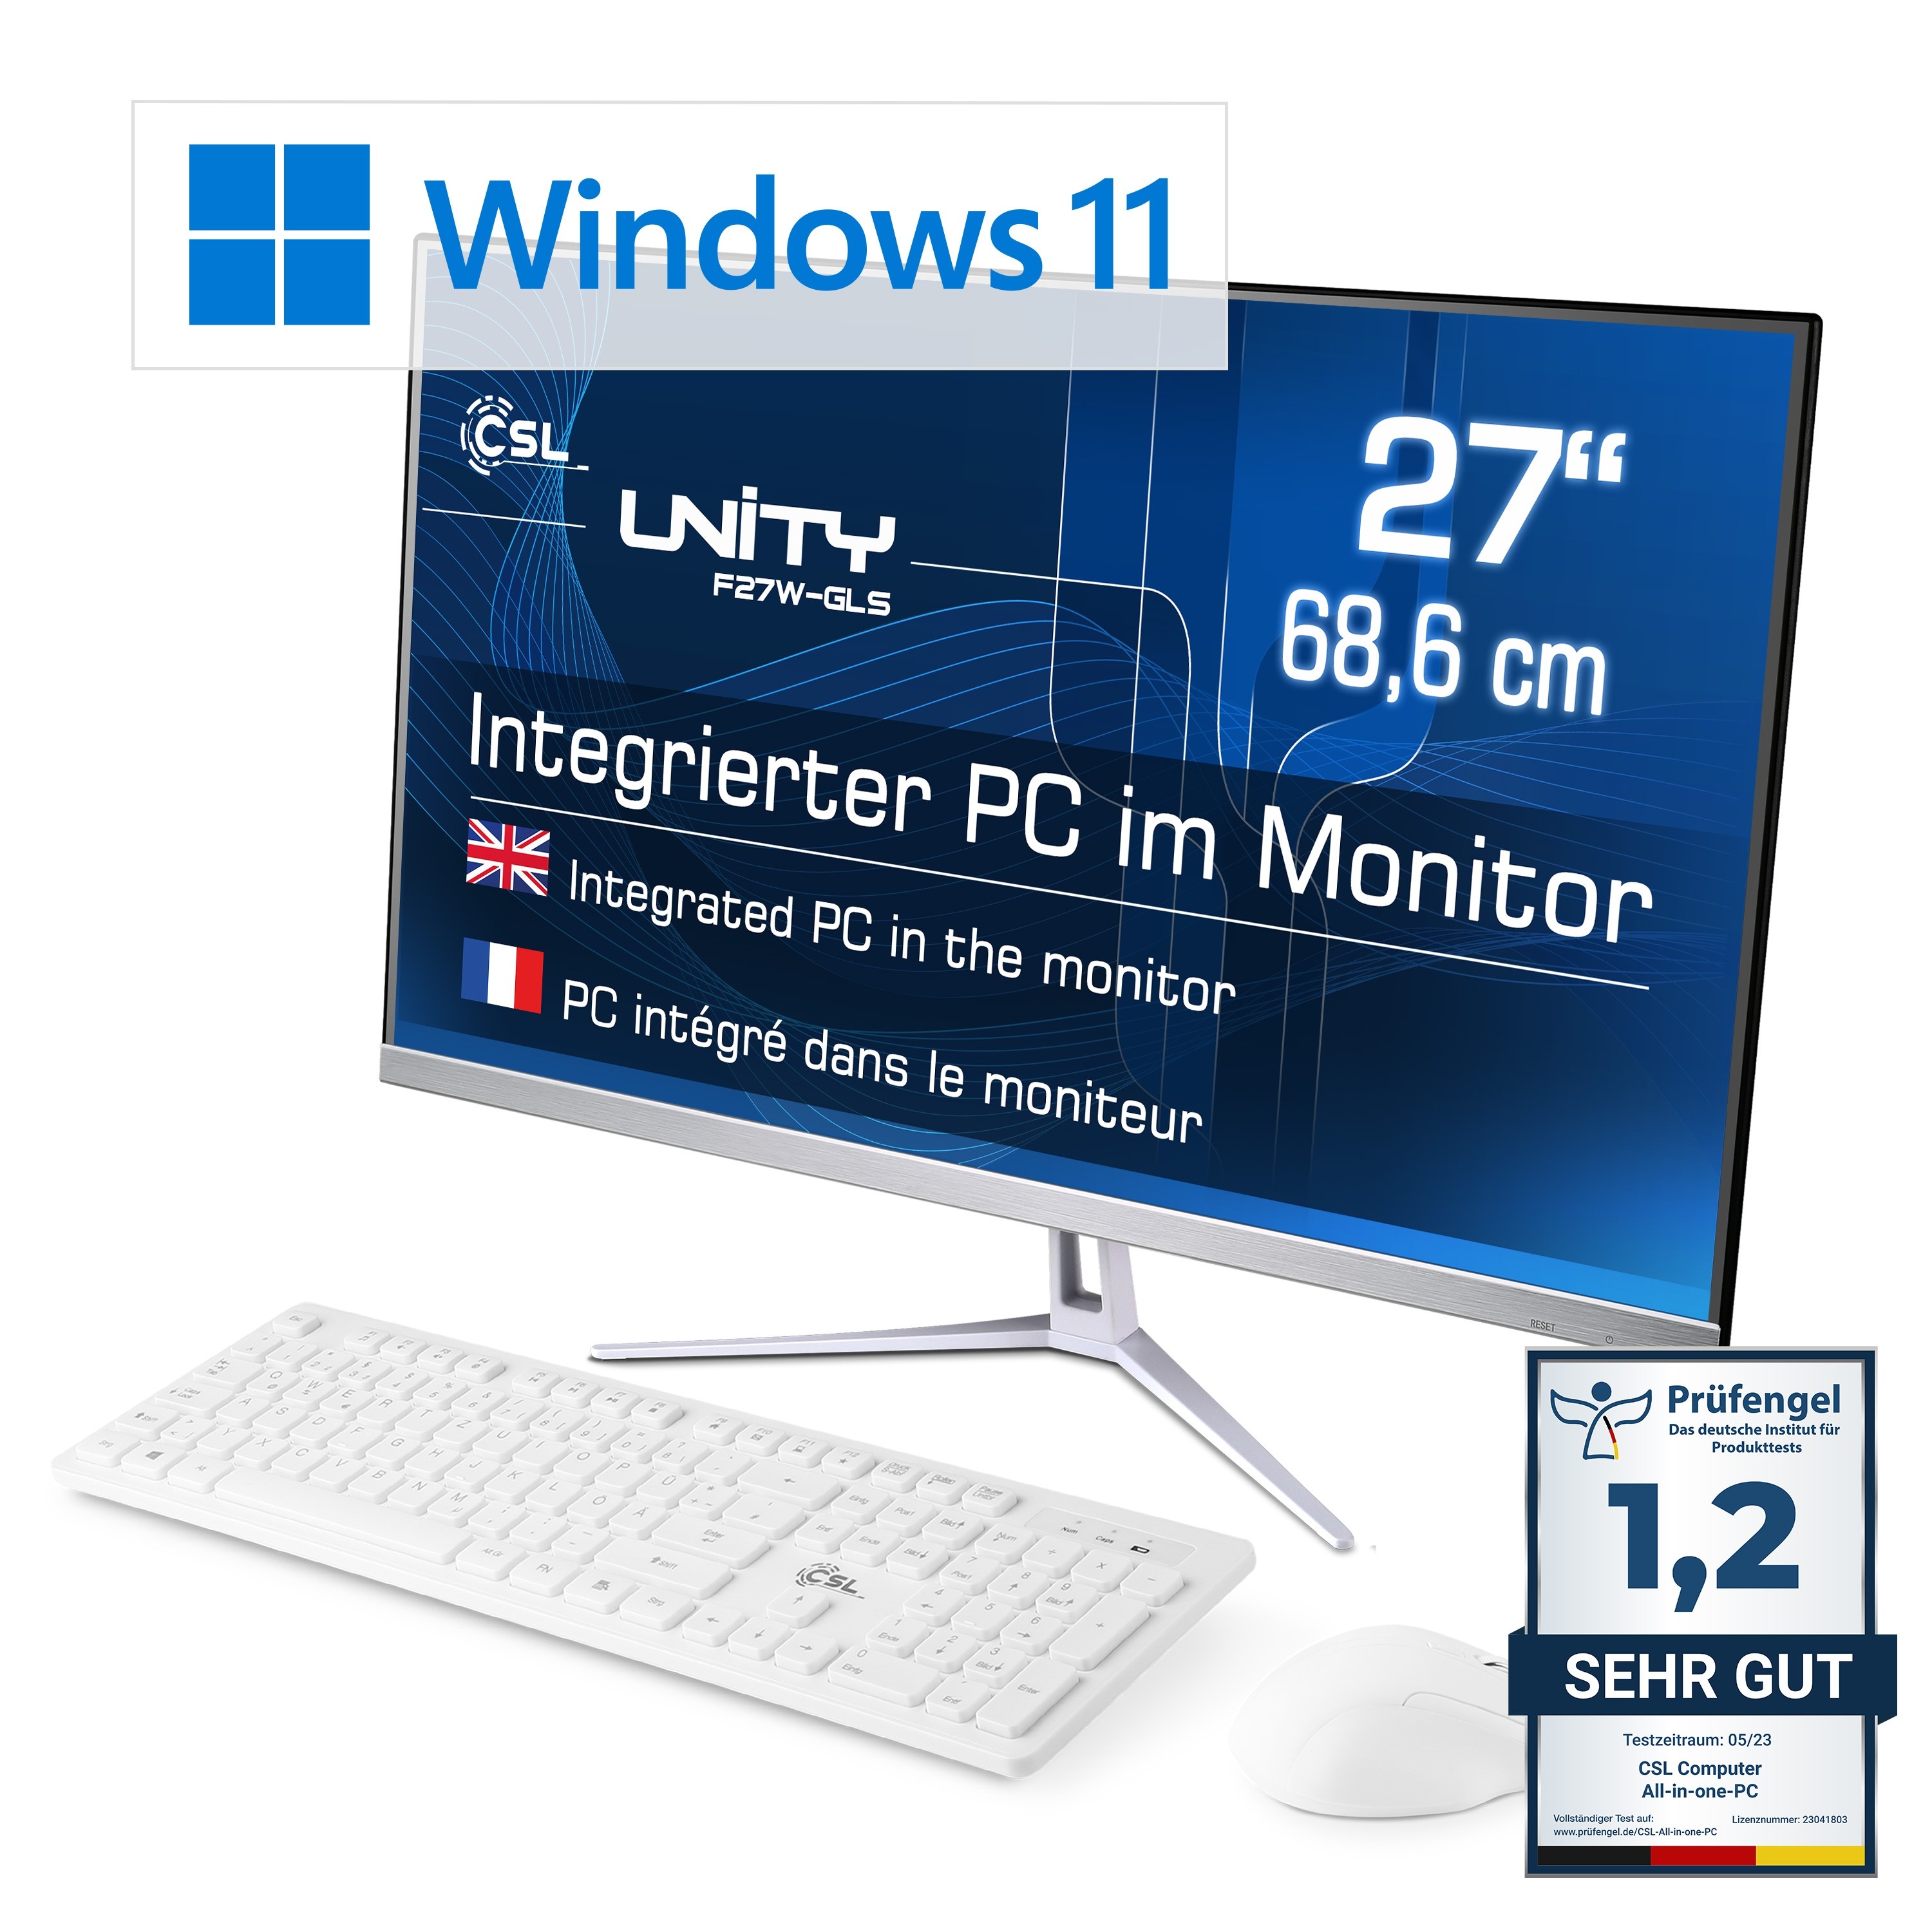 CSL Computer | All-in-One-PC / GB Windows / RAM GB 256 / Home F27W-JLS 11 Unity 16 CSL